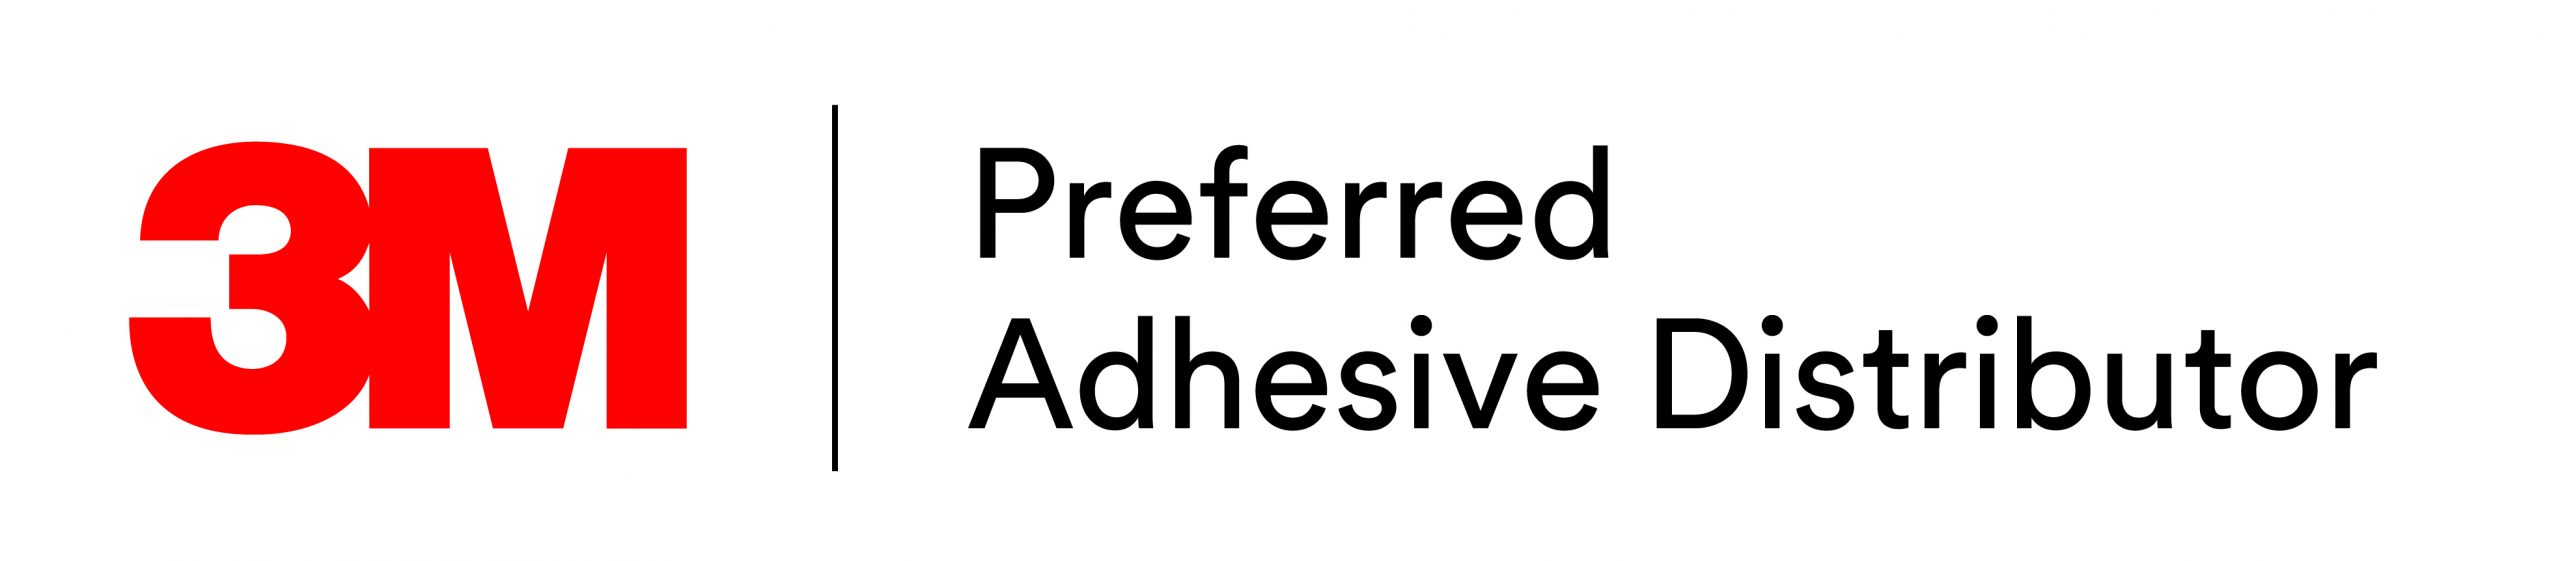 3M Preferred Adhesive Distributor